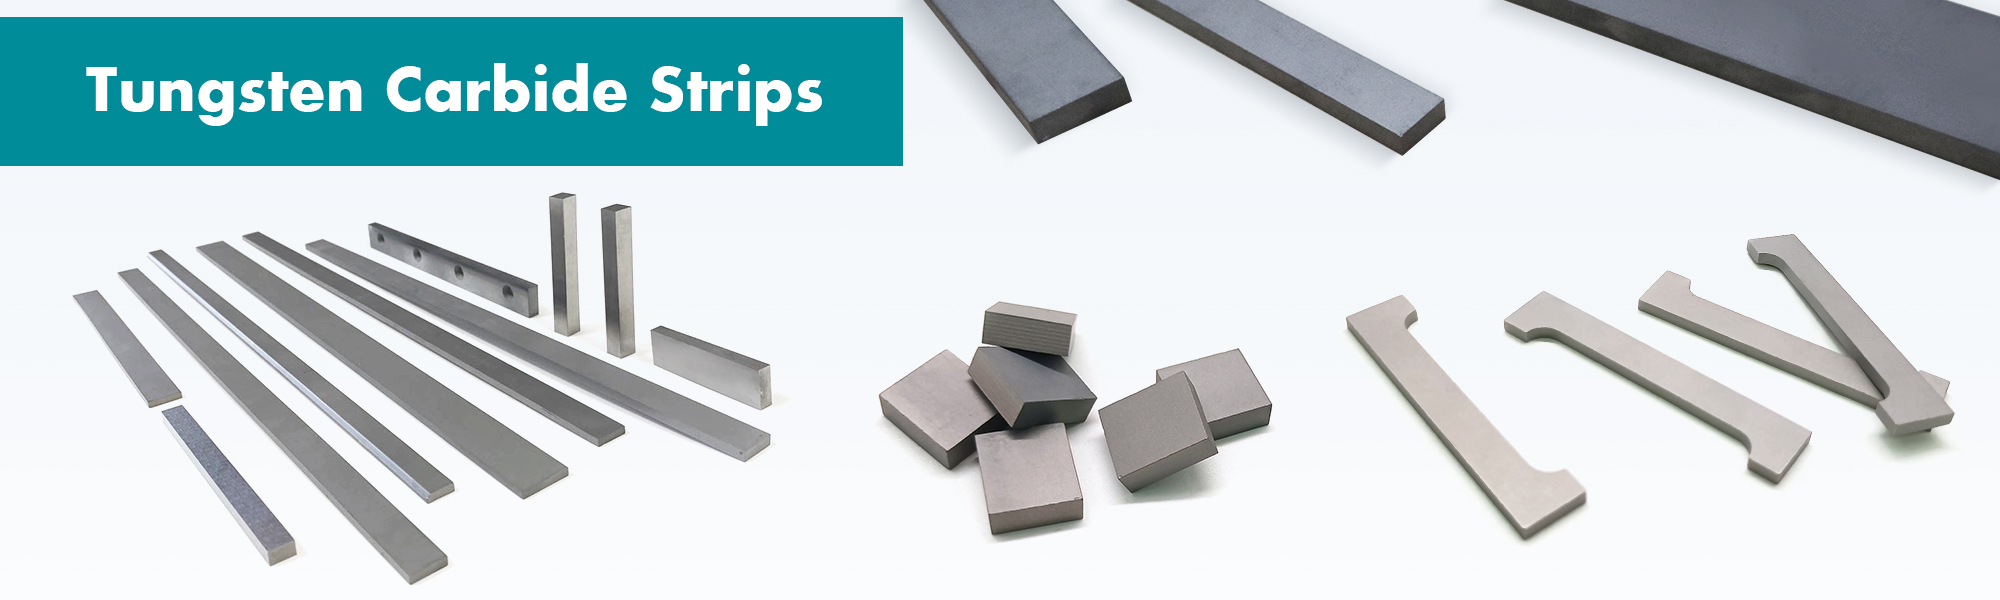 Brief introduction of Tungsten Carbide Strips